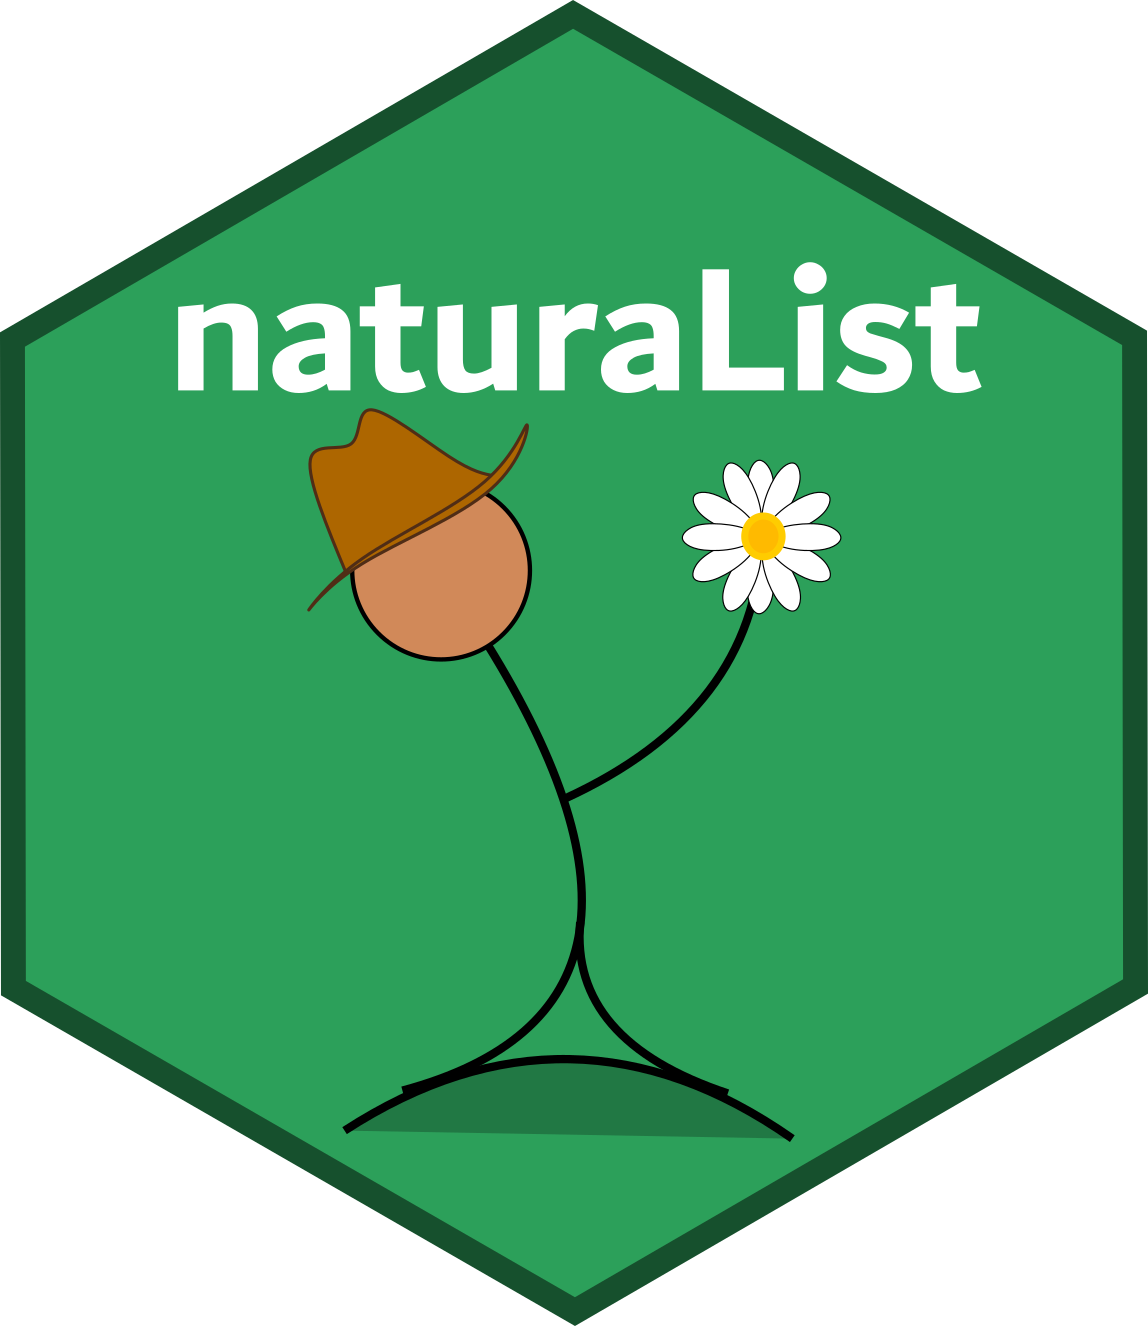 naturaList logo